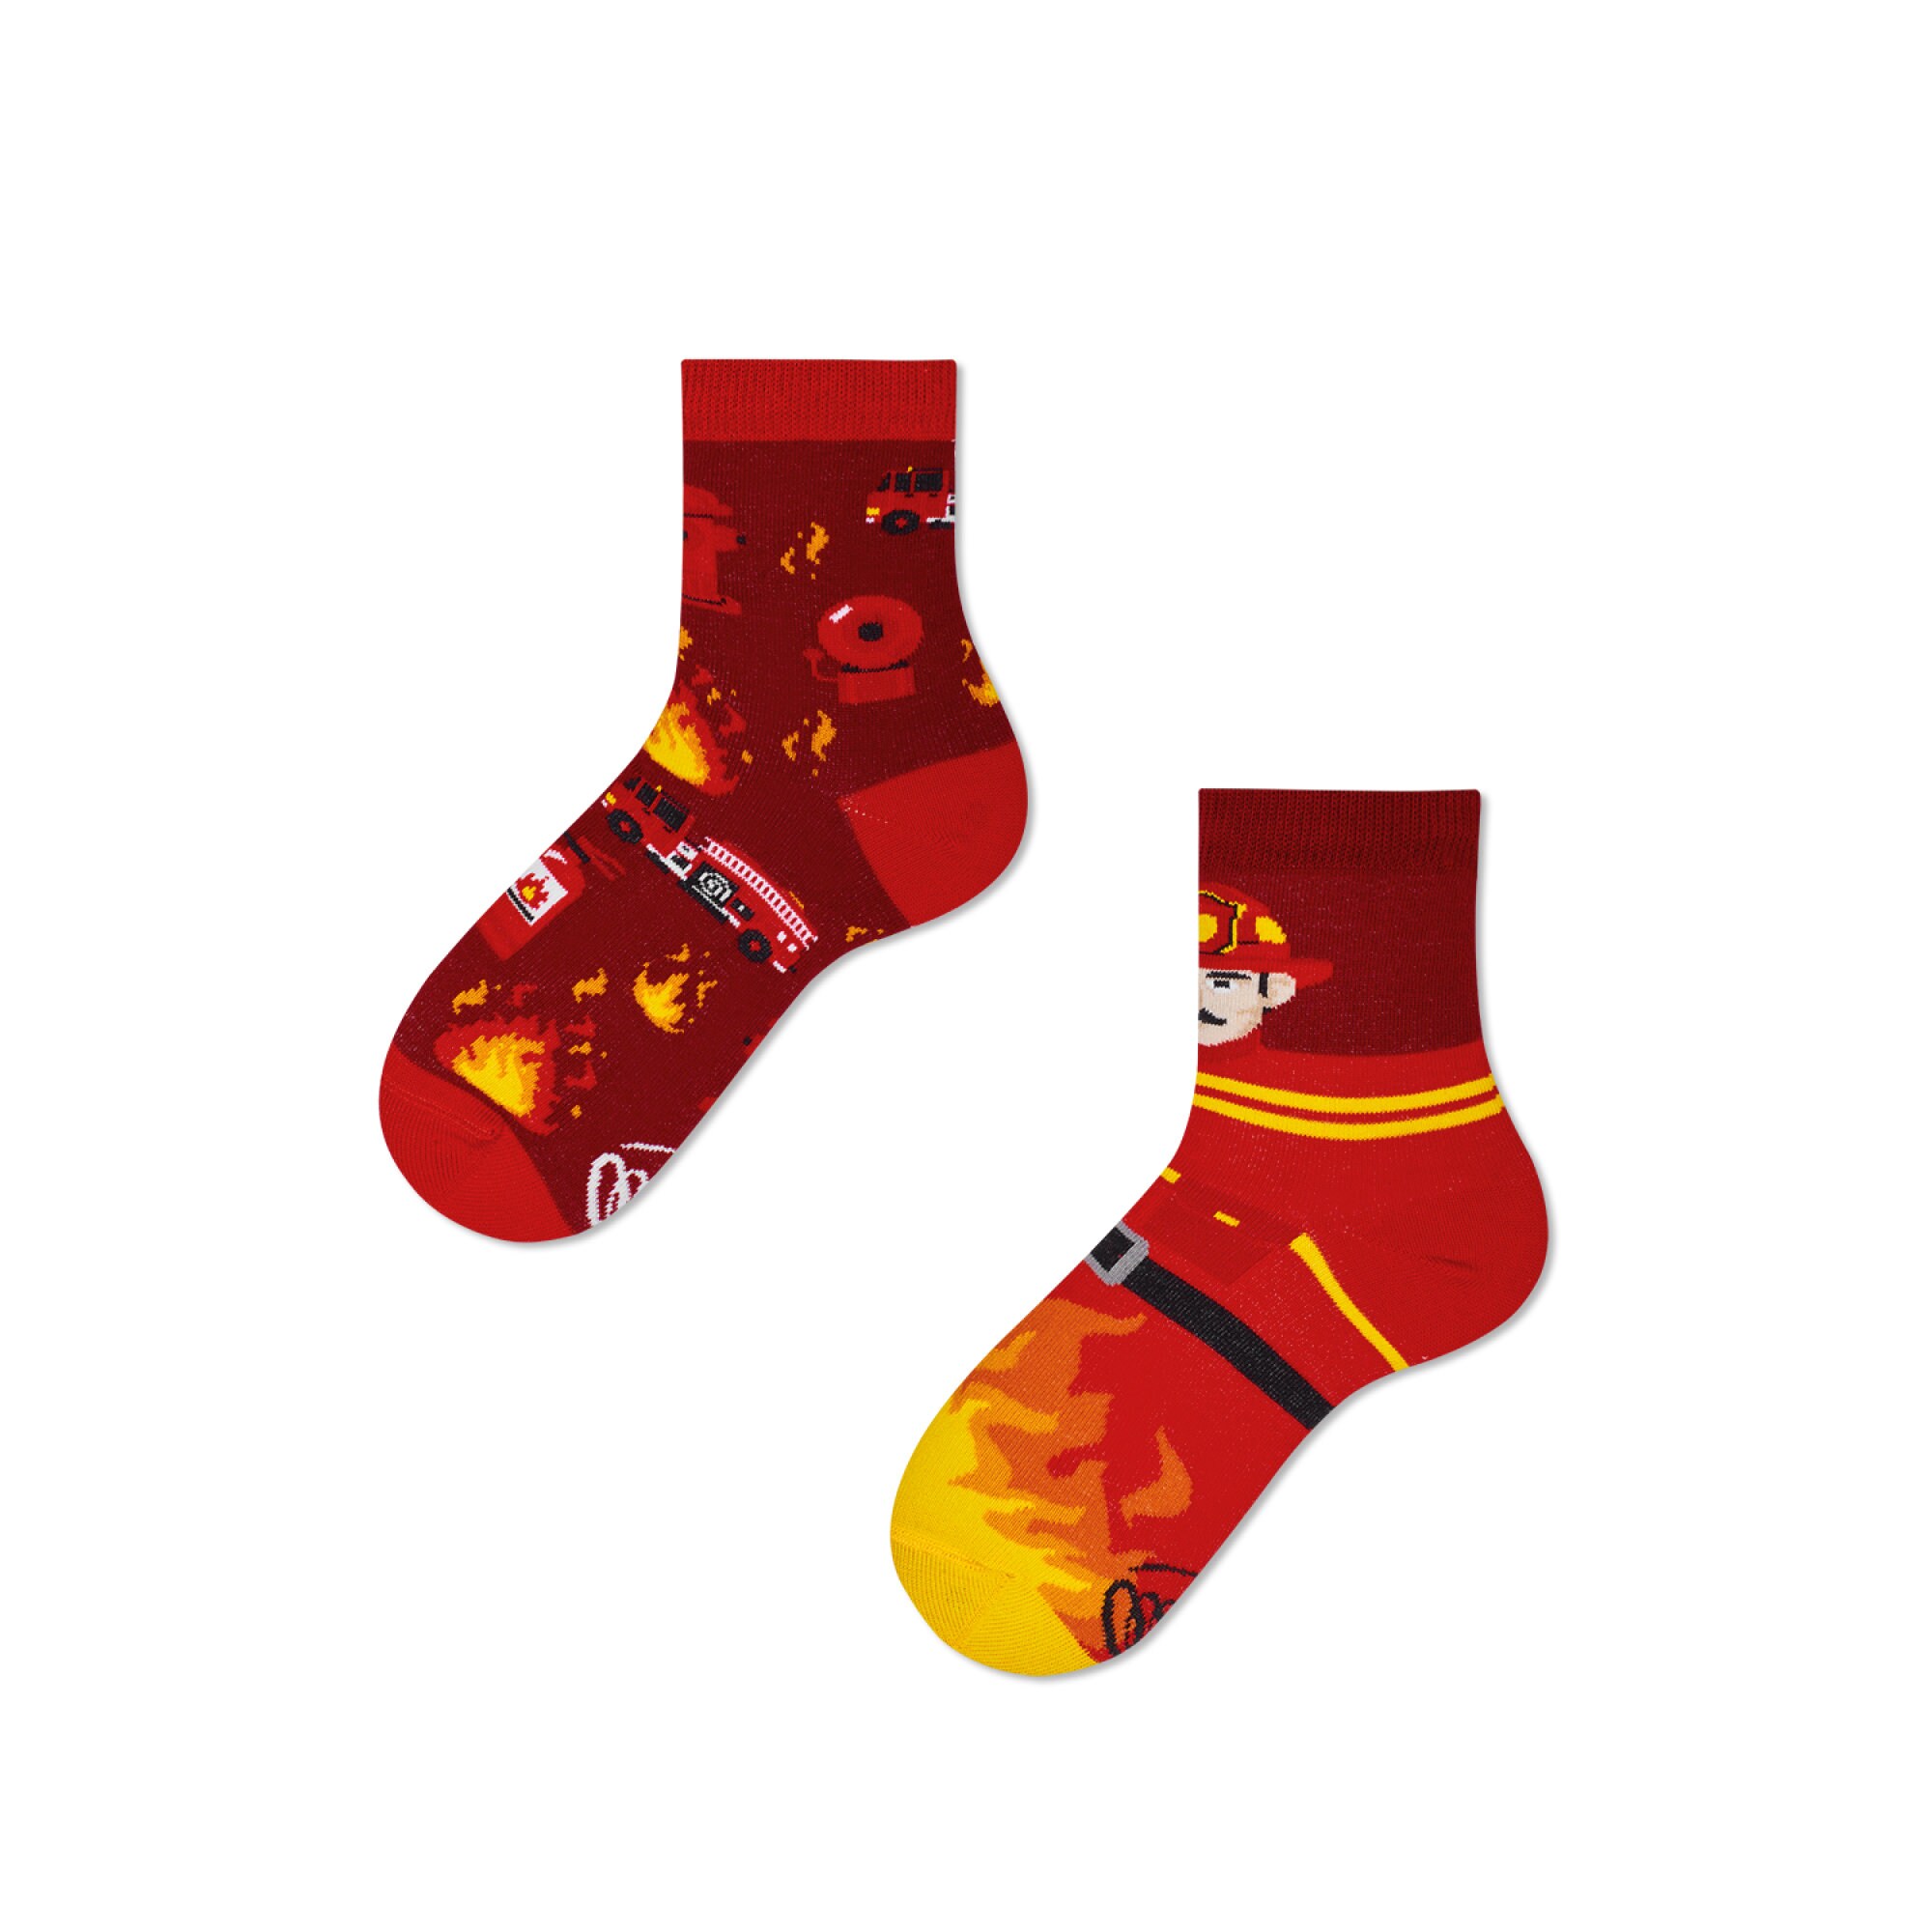 Brandweer kinderen sokken van VELE OCHTENDEN sokken Etsy